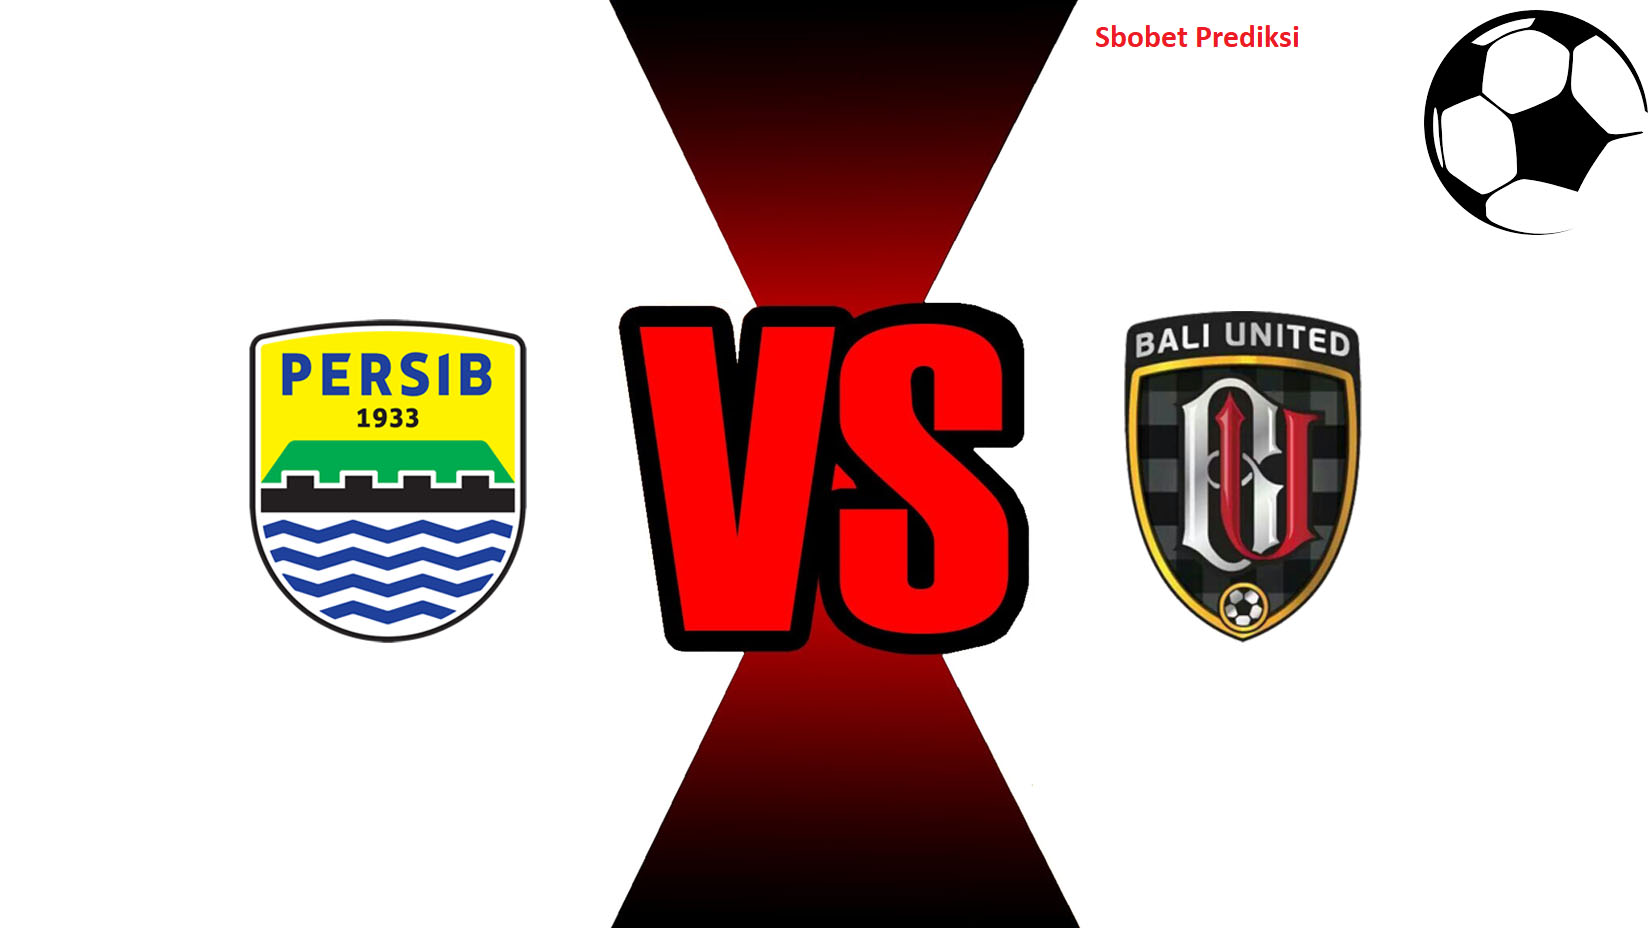 Prediksi Skor Bola Online Persib Bandung vs Bali United 30 Oktober 2018